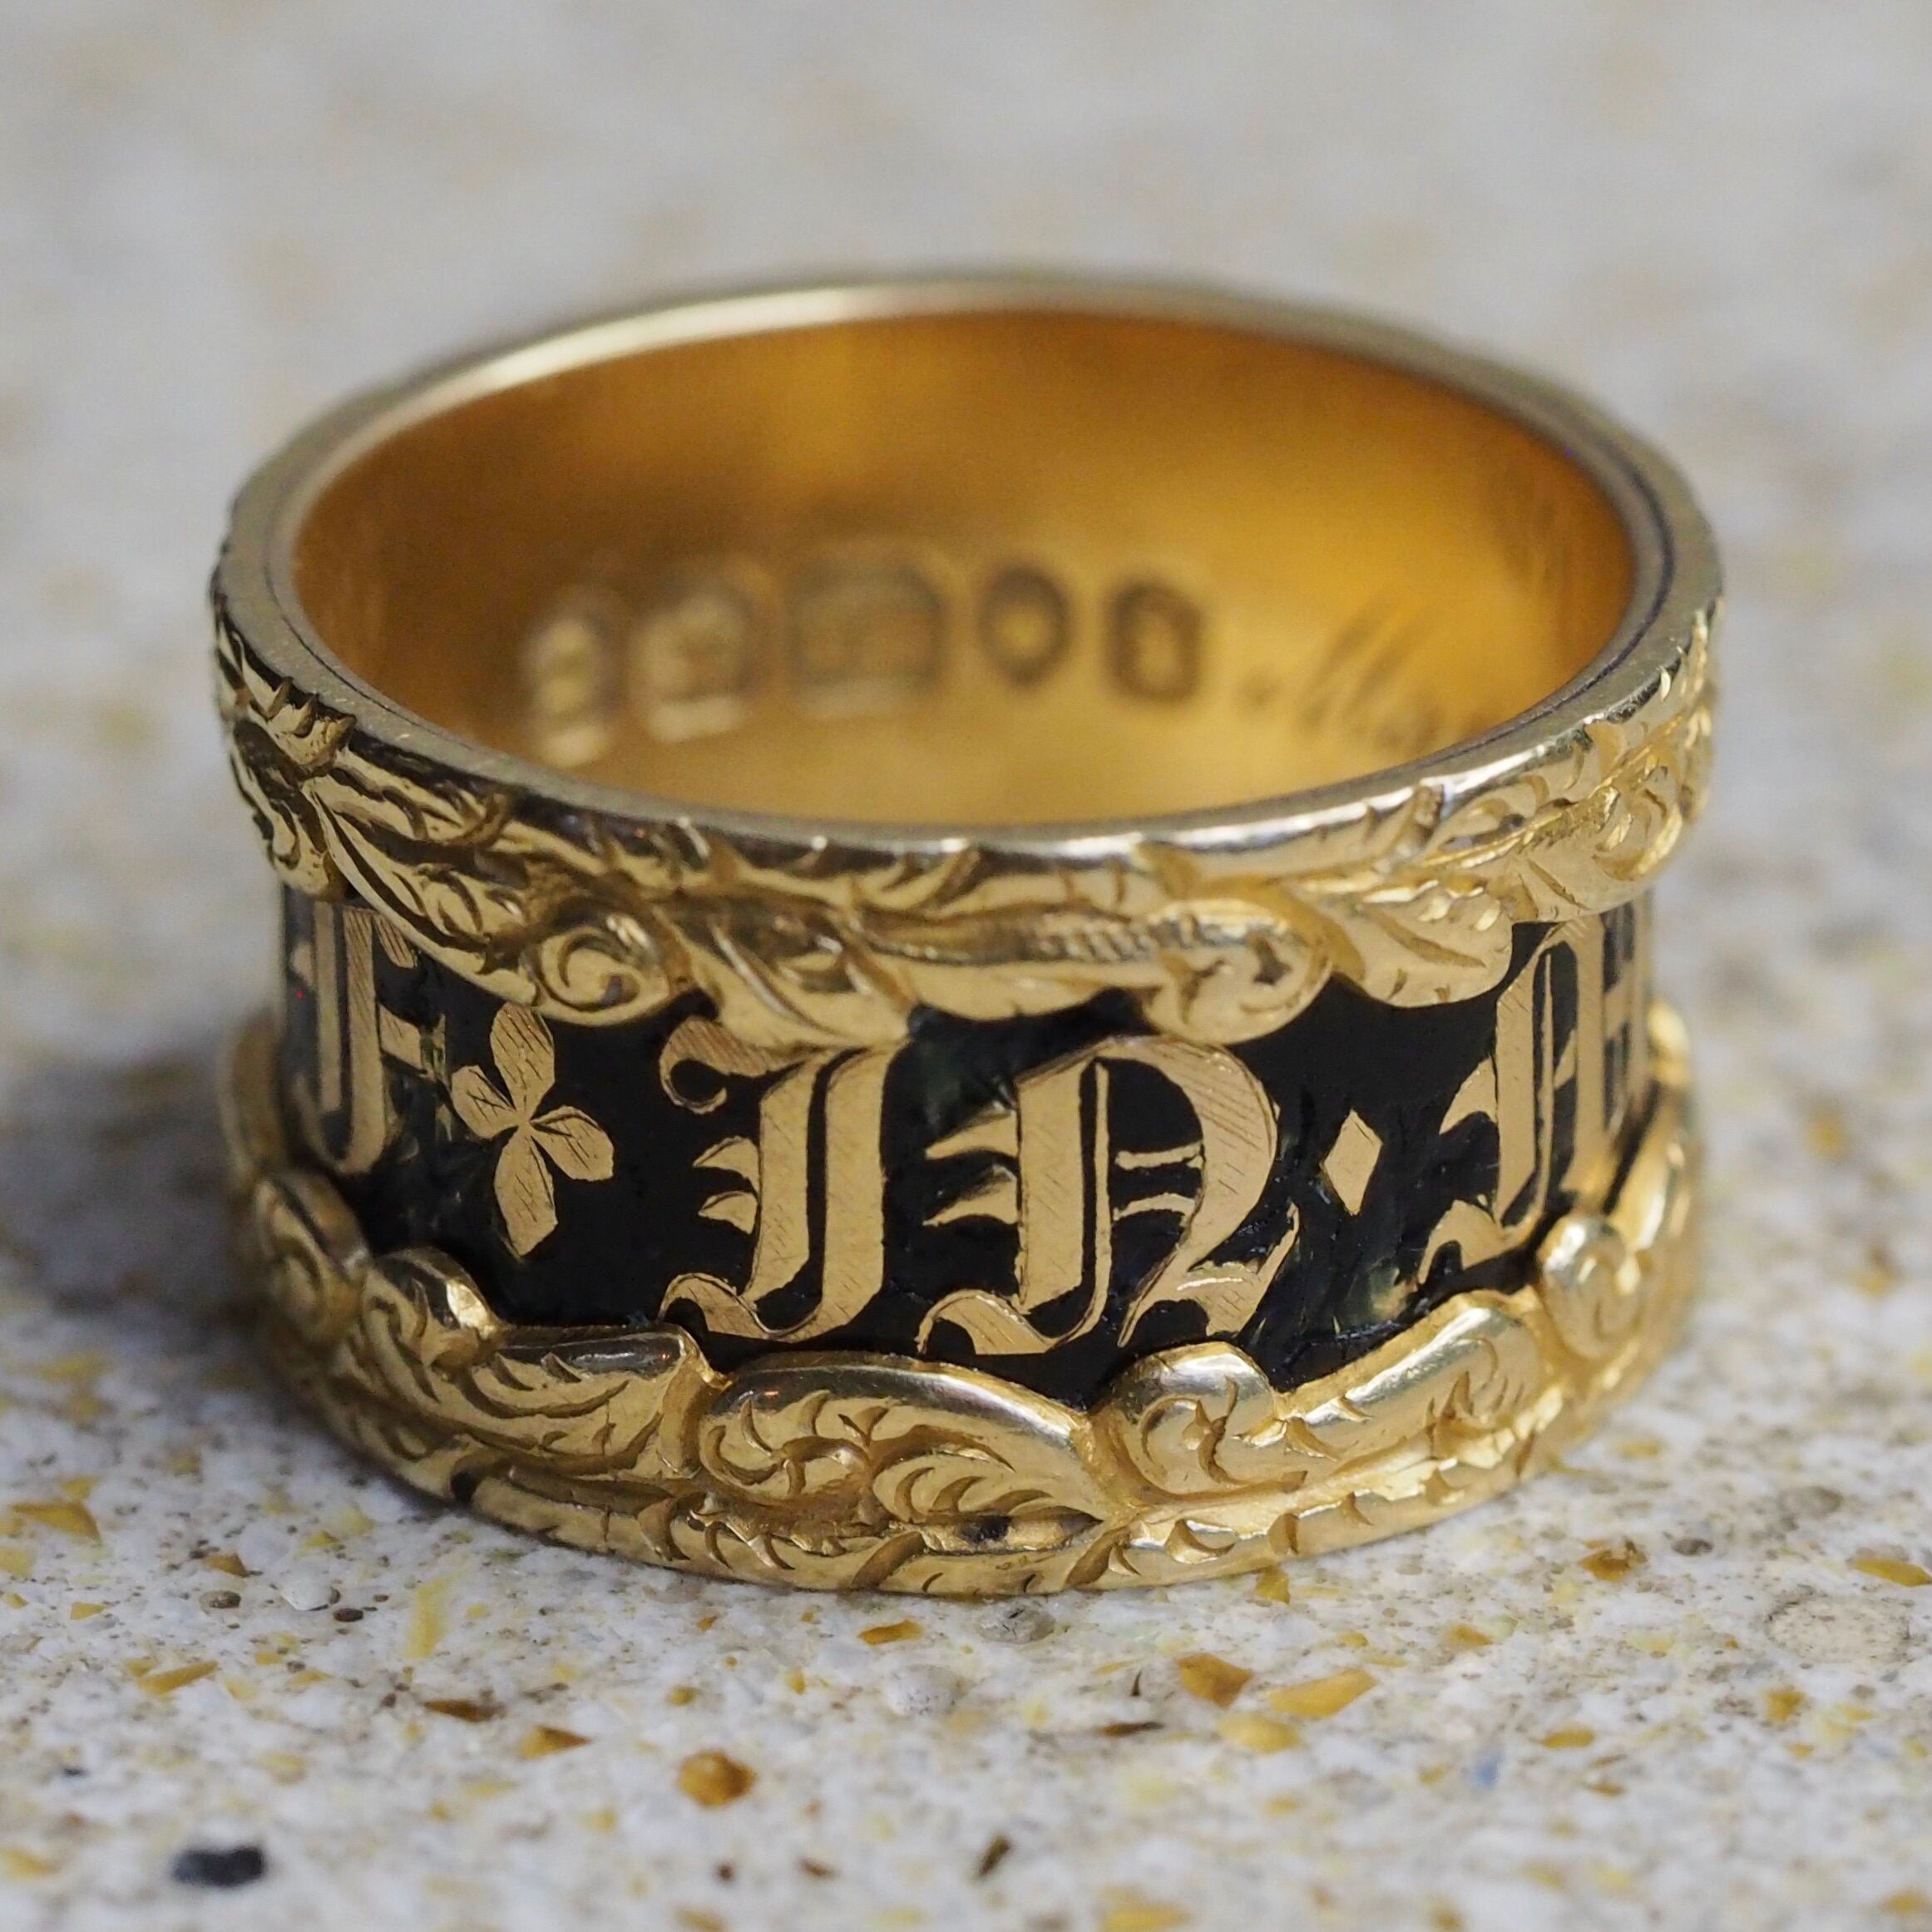 Antique c. 1825 18k Gold and Black Enamel Mourning Ring